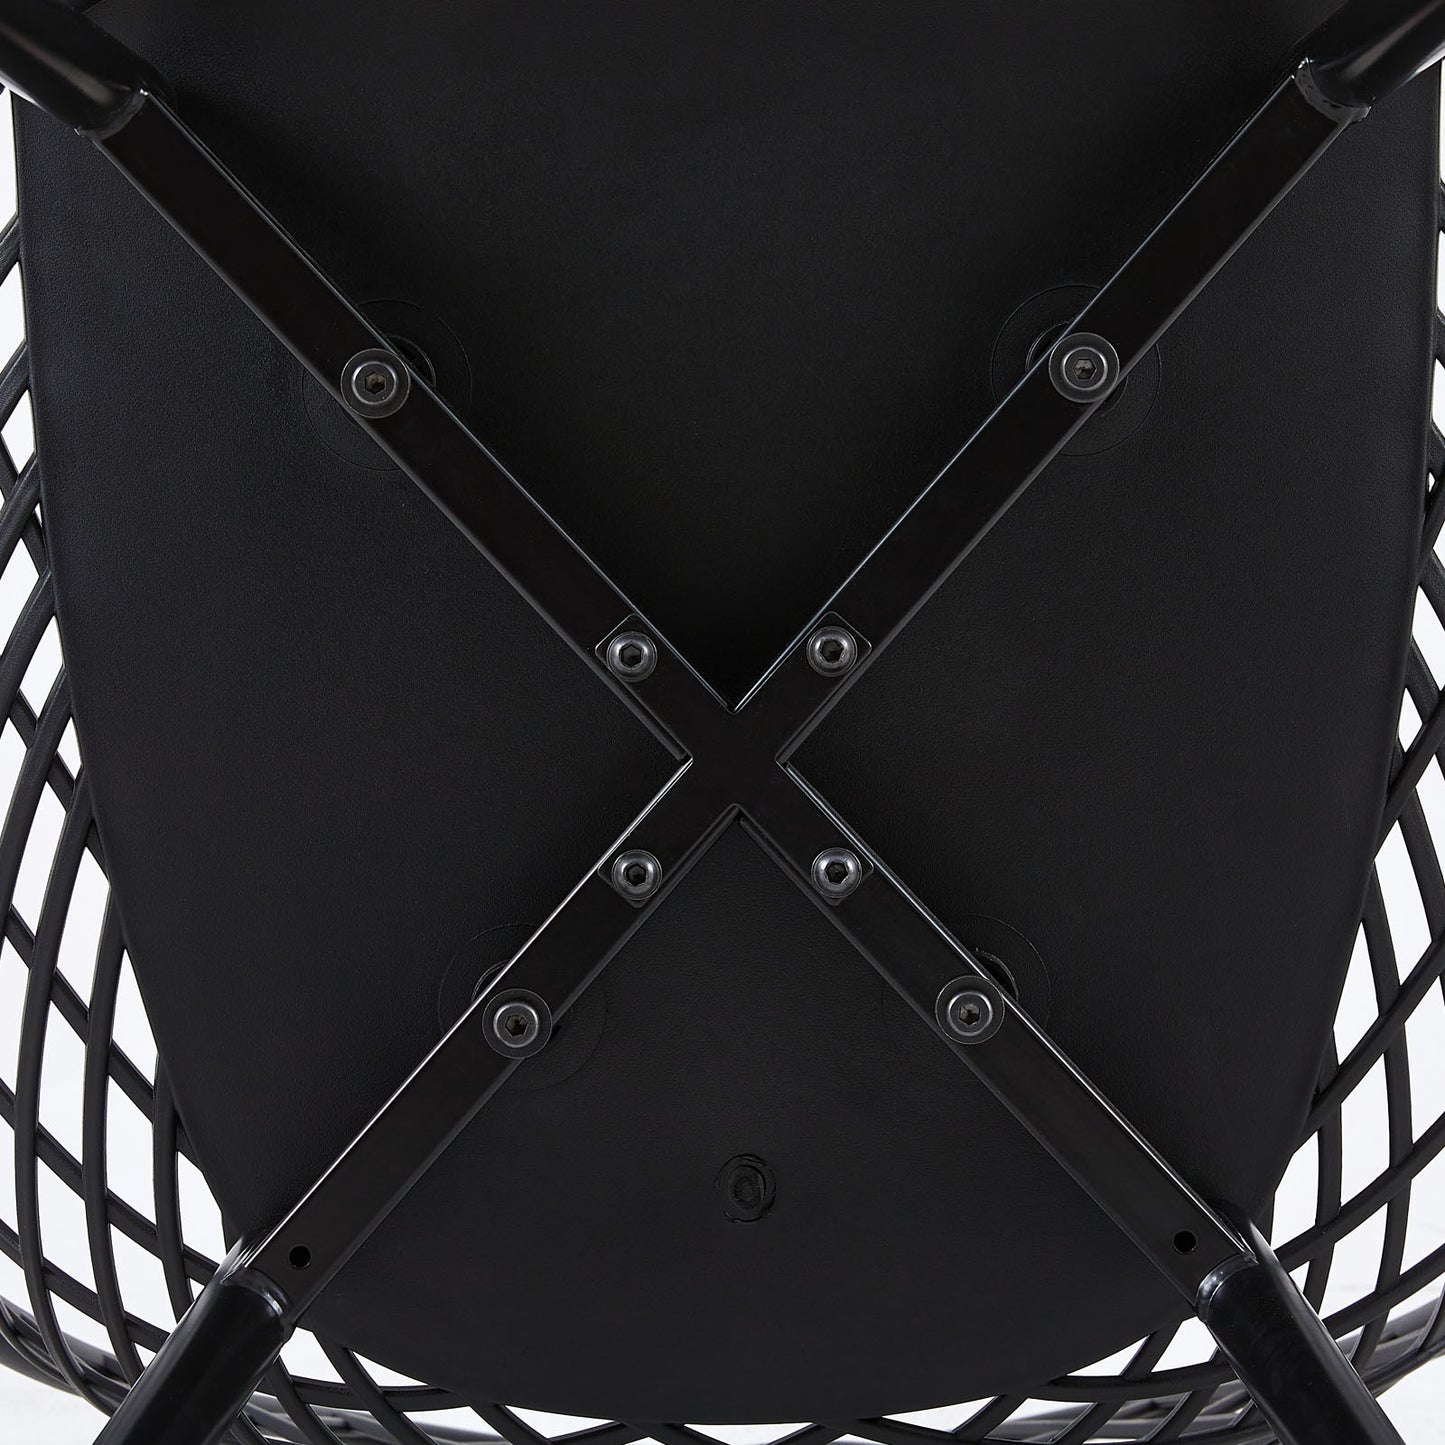 MILAN  Metal Side Chair (Set of 4) - Black/Gray/White